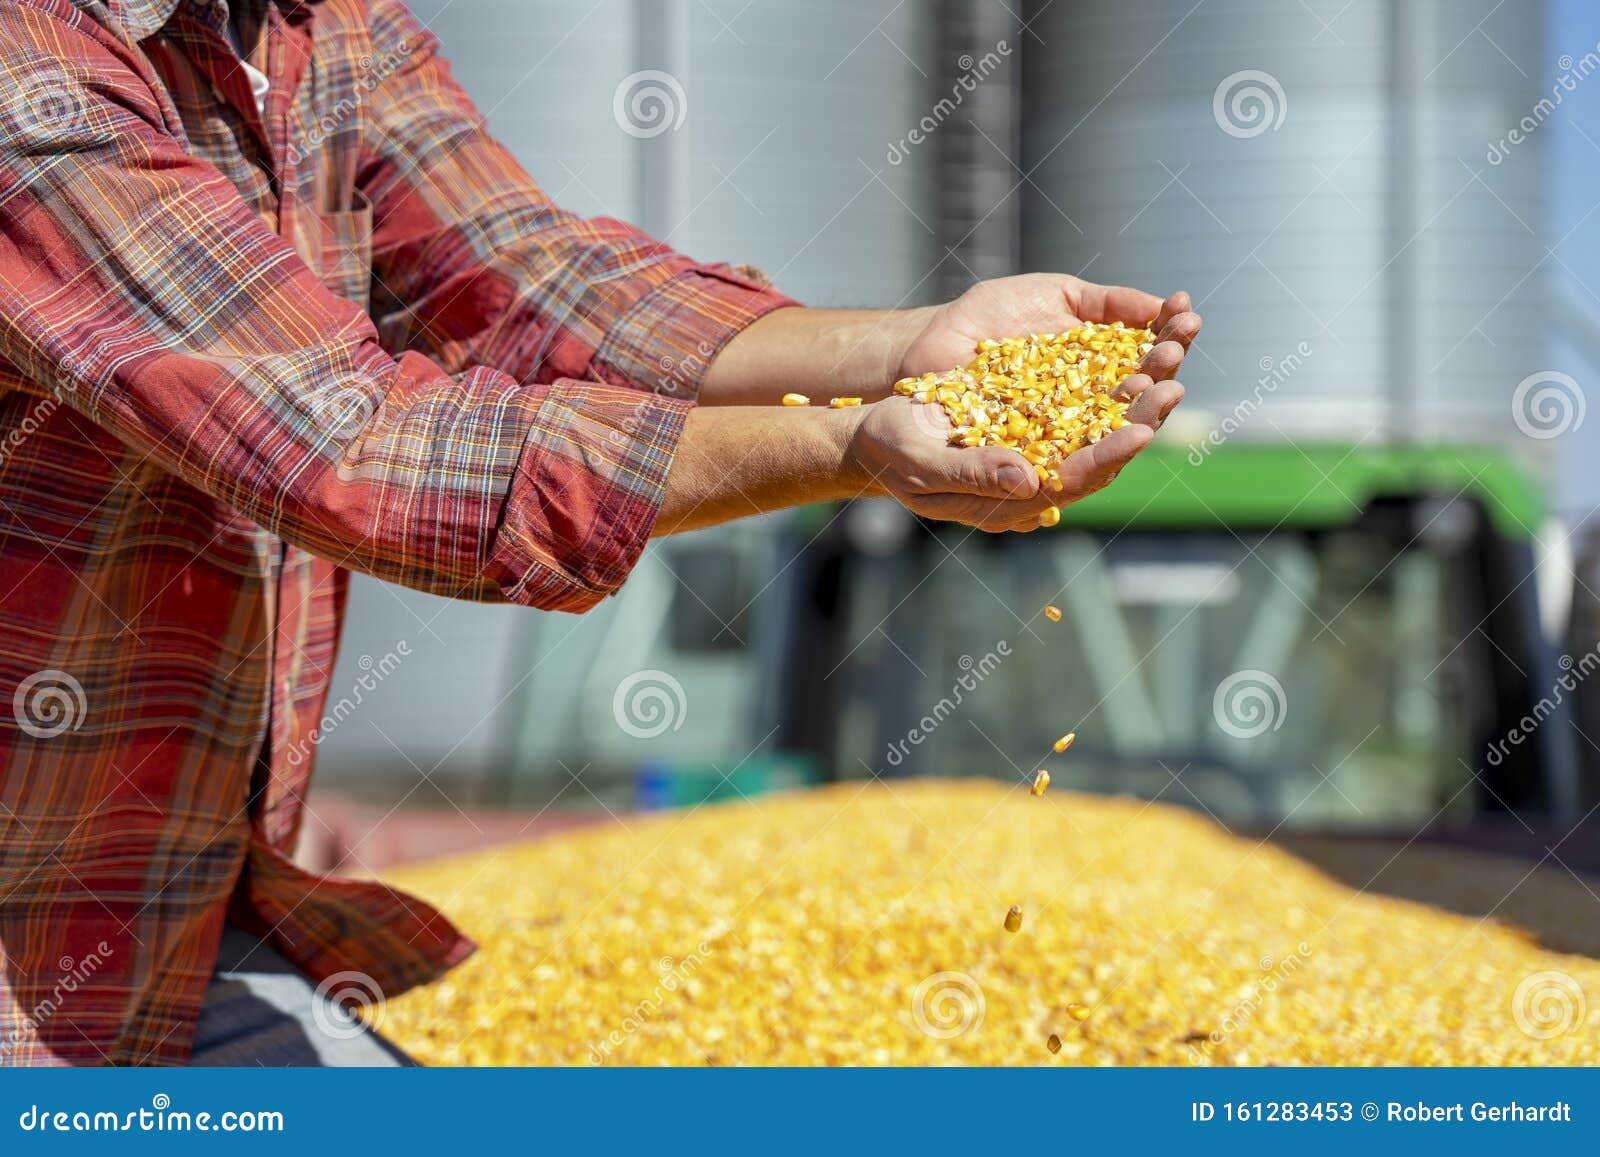 farmer showing freshly harvested corn maize grains against grain silo